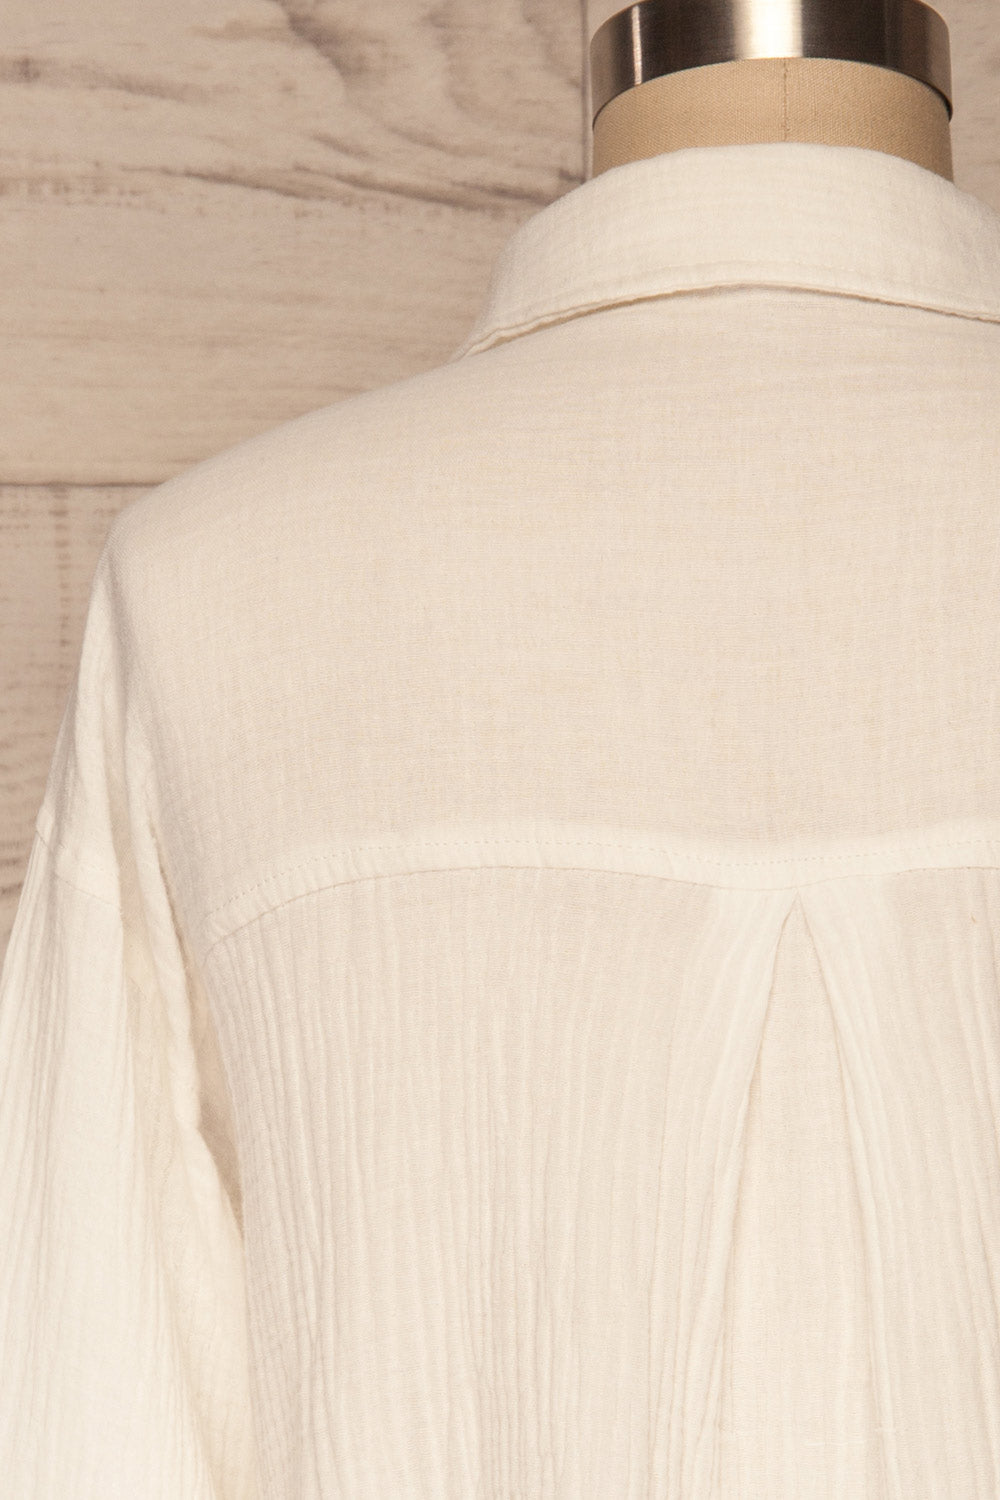 Eggesvik White Textured Button-Up Shirt | La petite garçonne  bas close up